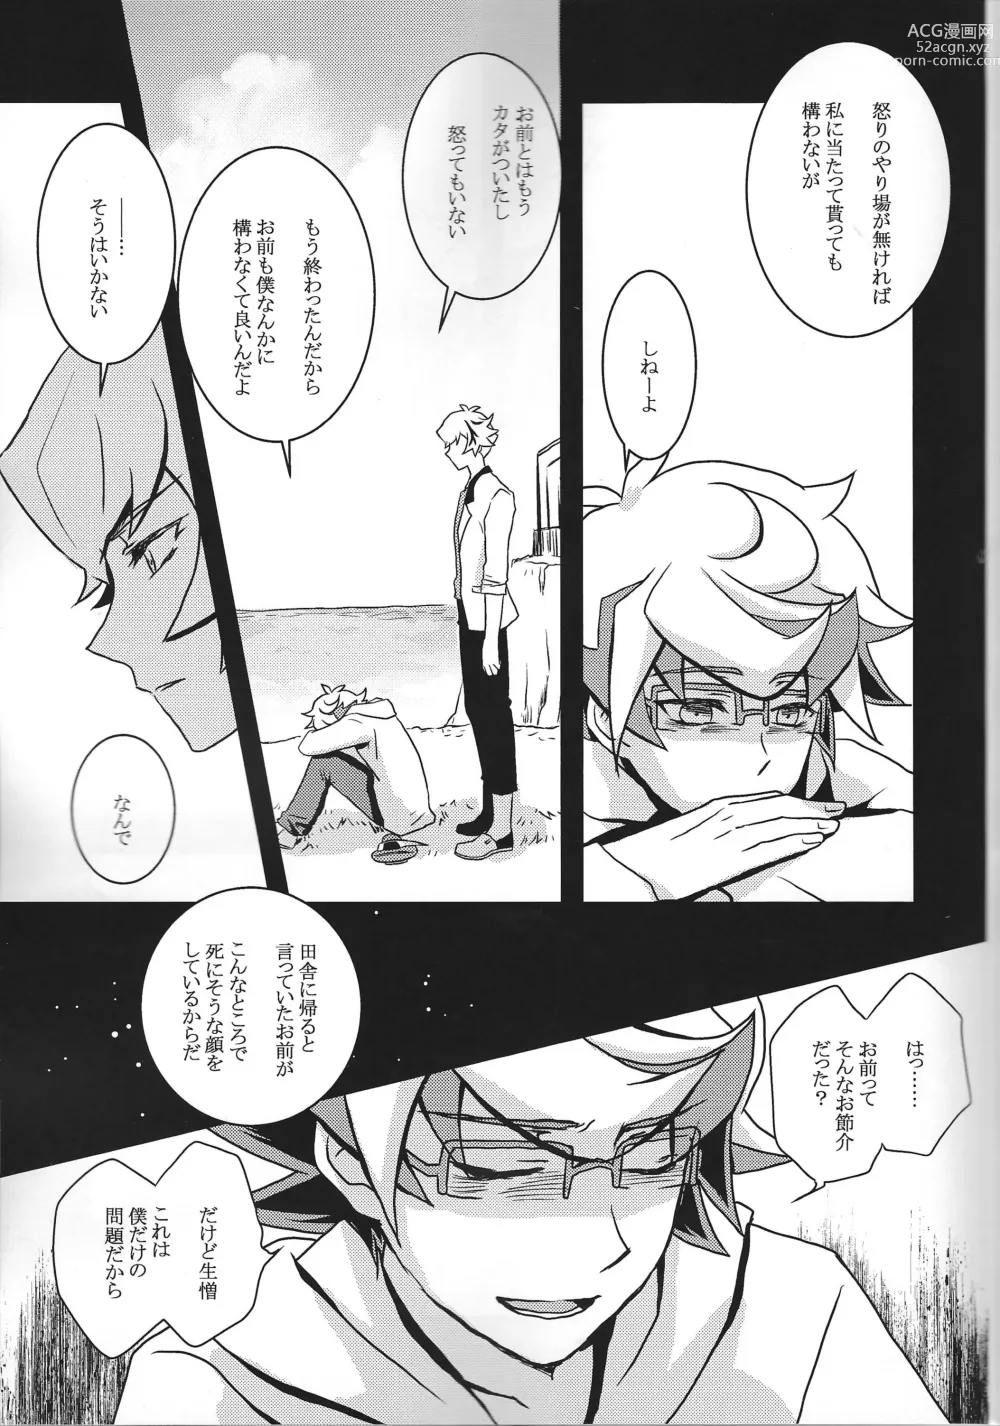 Page 10 of doujinshi Na o Yobu Koe